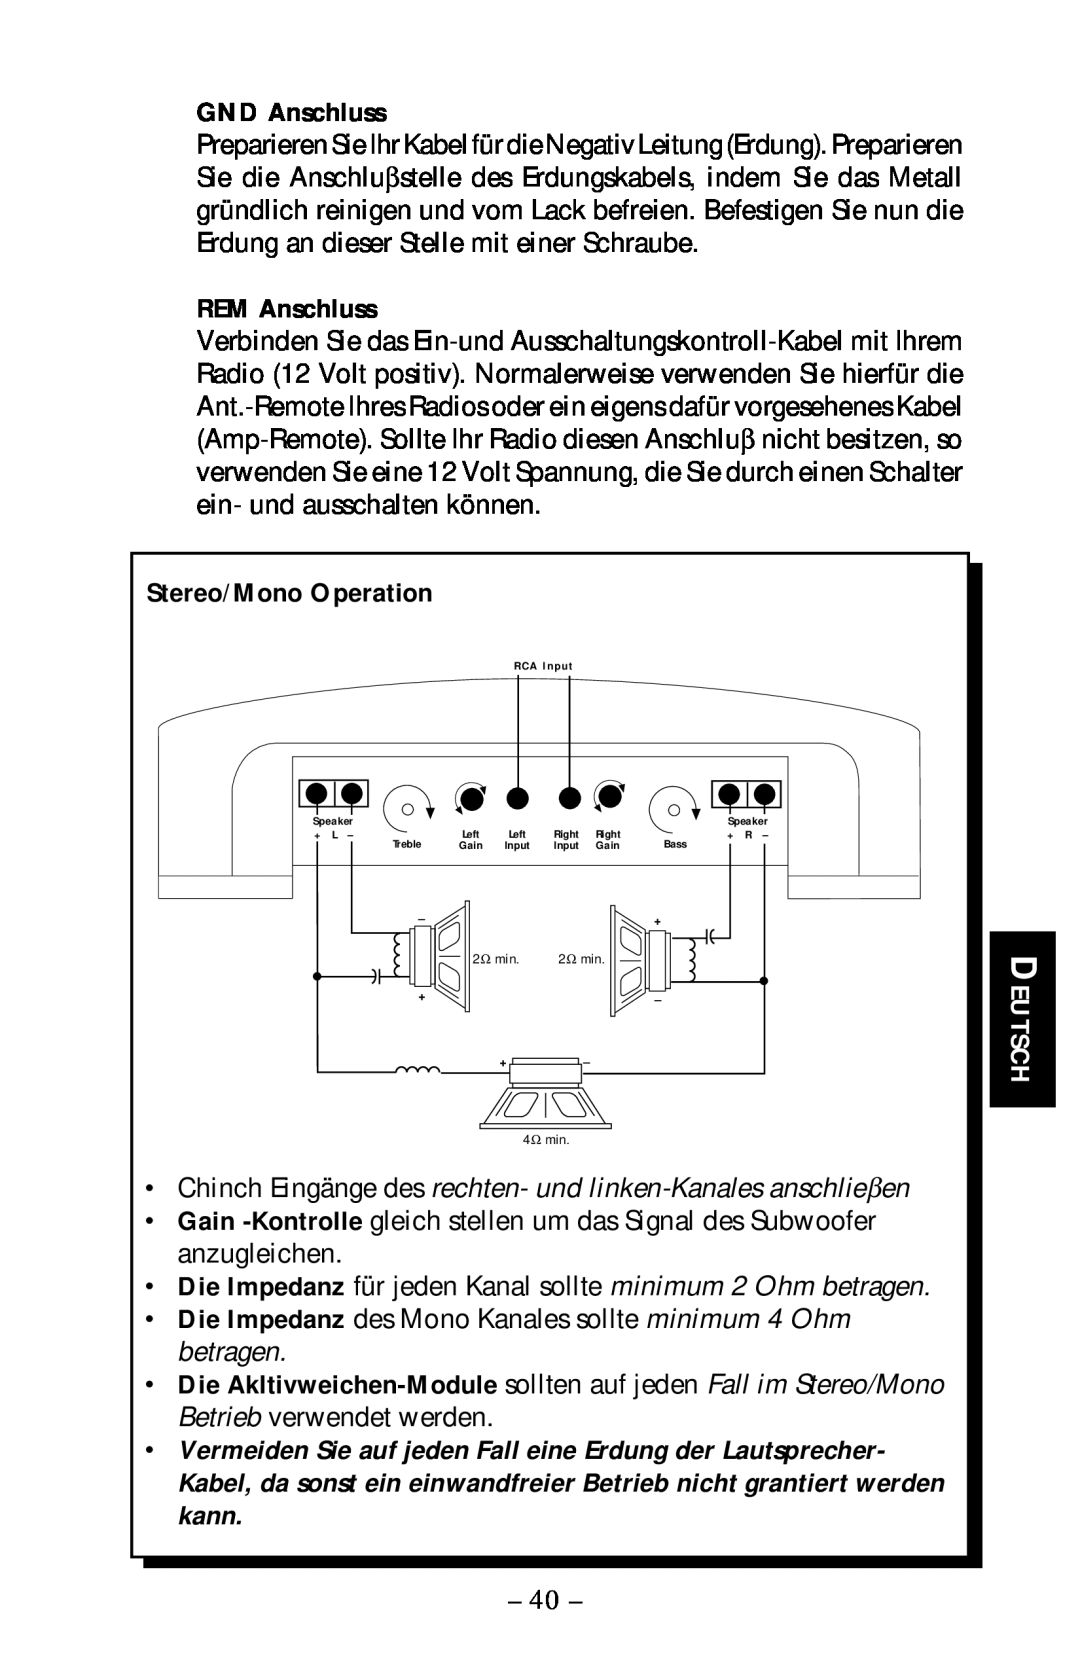 Rockford Fosgate 40X2 manual GND Anschluss, REM Anschluss, Stereo/Mono Operation 